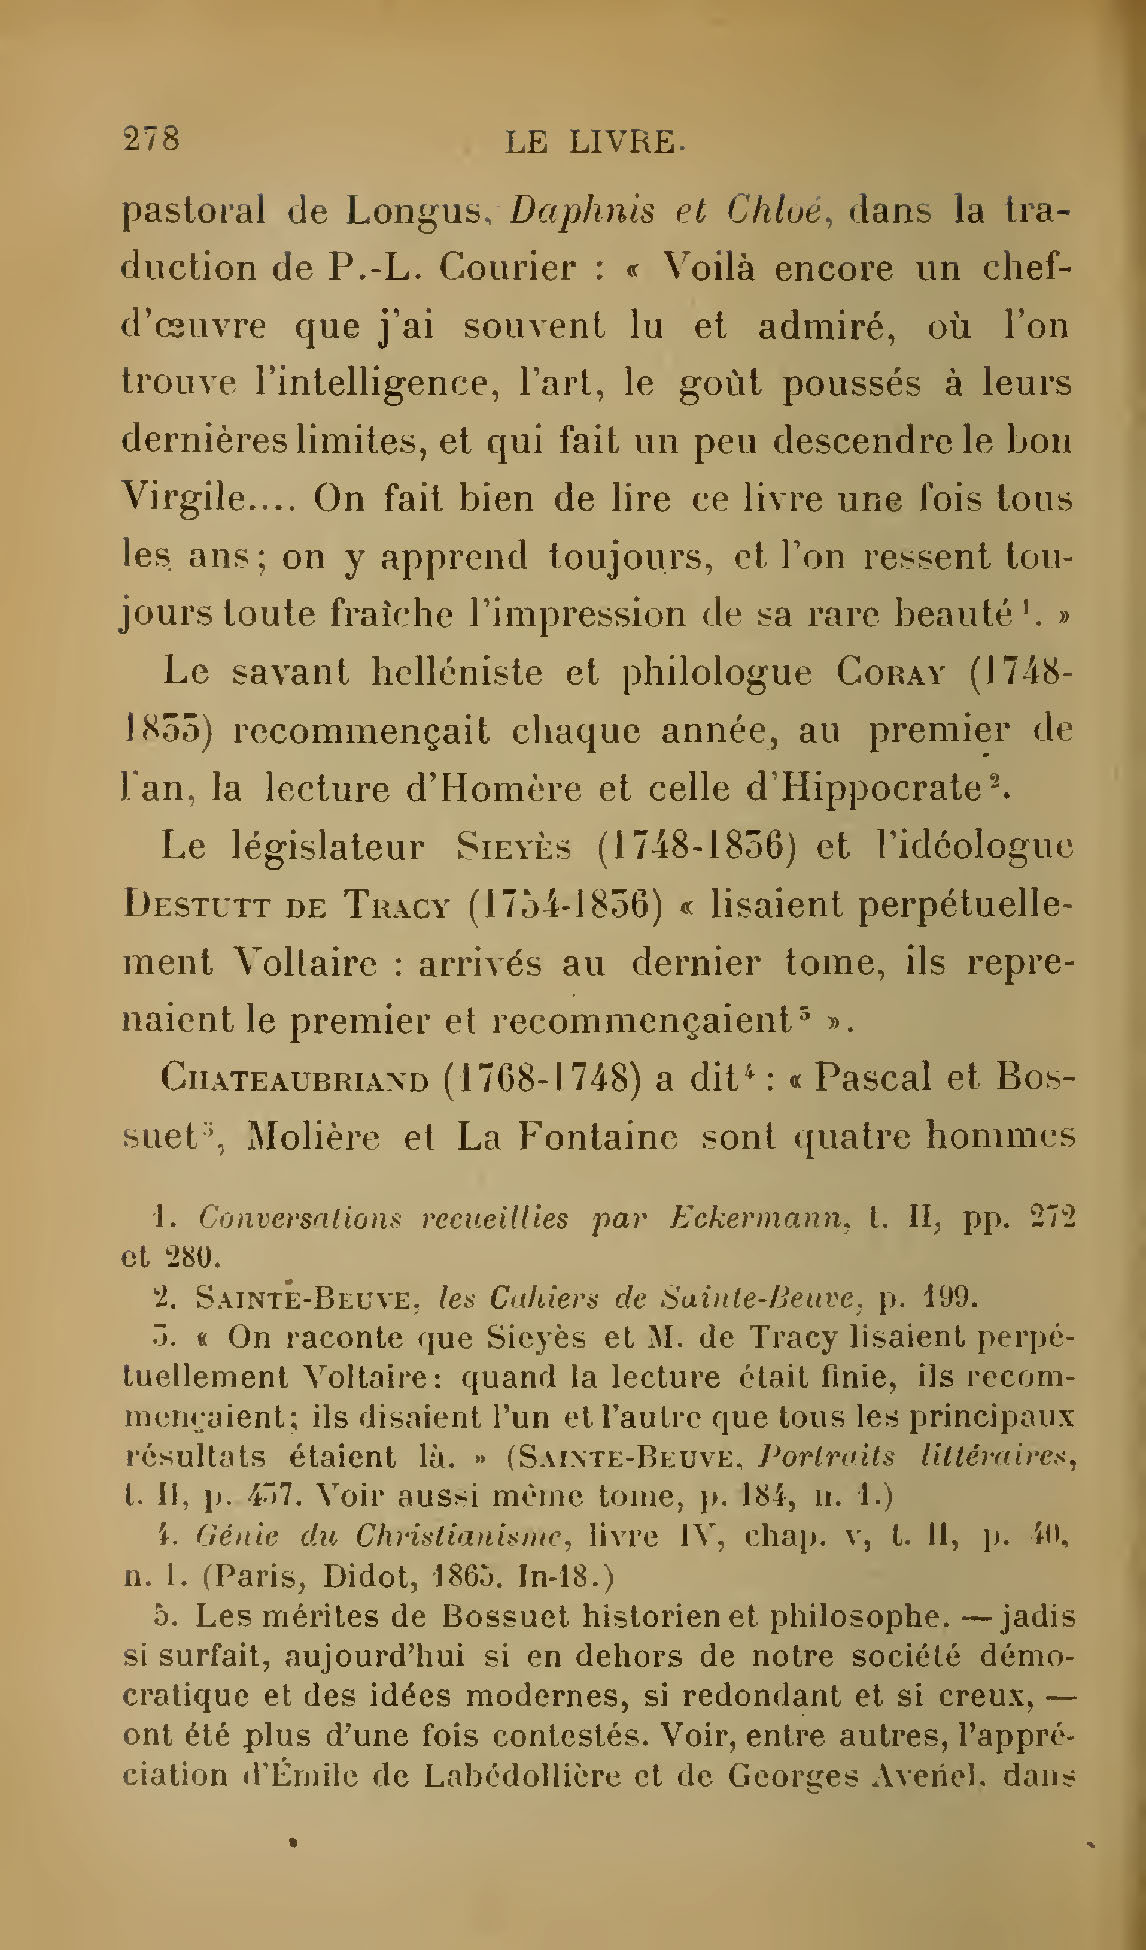 Albert Cim, Le Livre, t. I, p. 278.